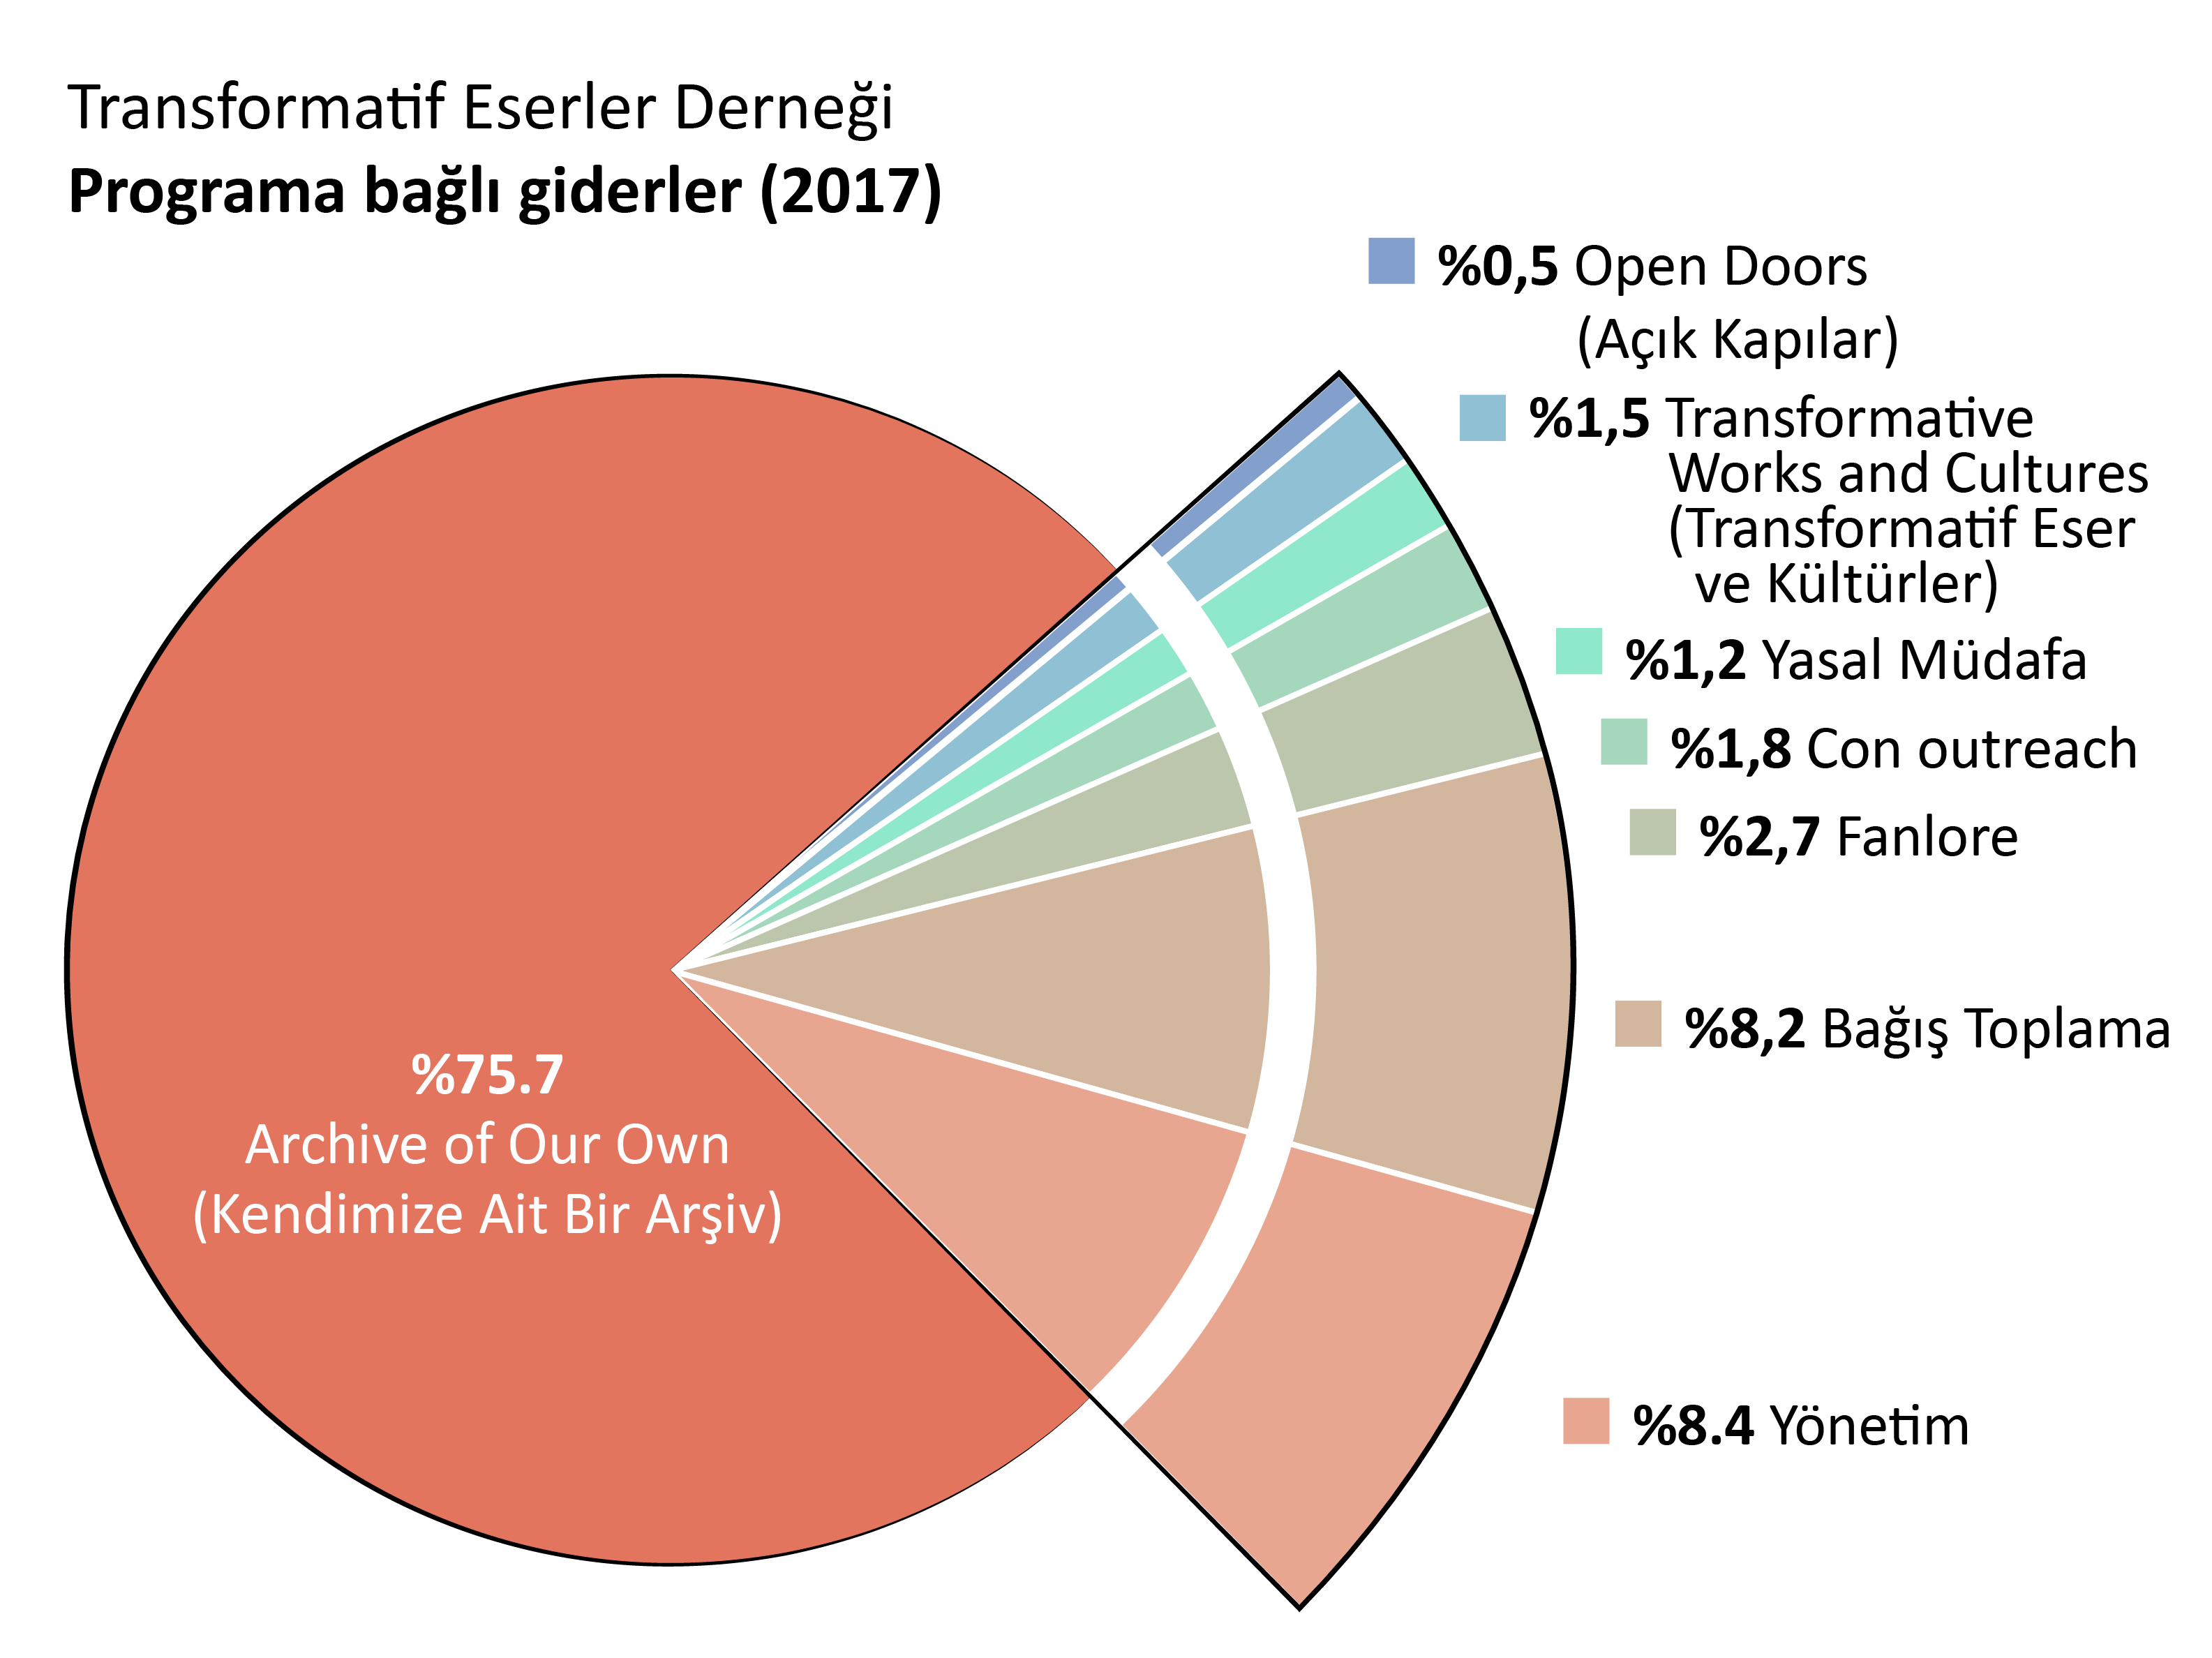 Programa bağlı giderler:Archive of Our Own - AO3 (Kendimize Ait Bir Arşiv): %75.7. Open Doors (Açık Kapılar): %0.5.Transformative Works and Cultures - TWC (Transformatif Eser ve Kültürler): %1.5. Fanlore: %2.7. Legal Advocacy (Yasal Müdafa): %1.2 Con Outreach: %1.8. Admin: %8.4. Para Toplama:%8.2